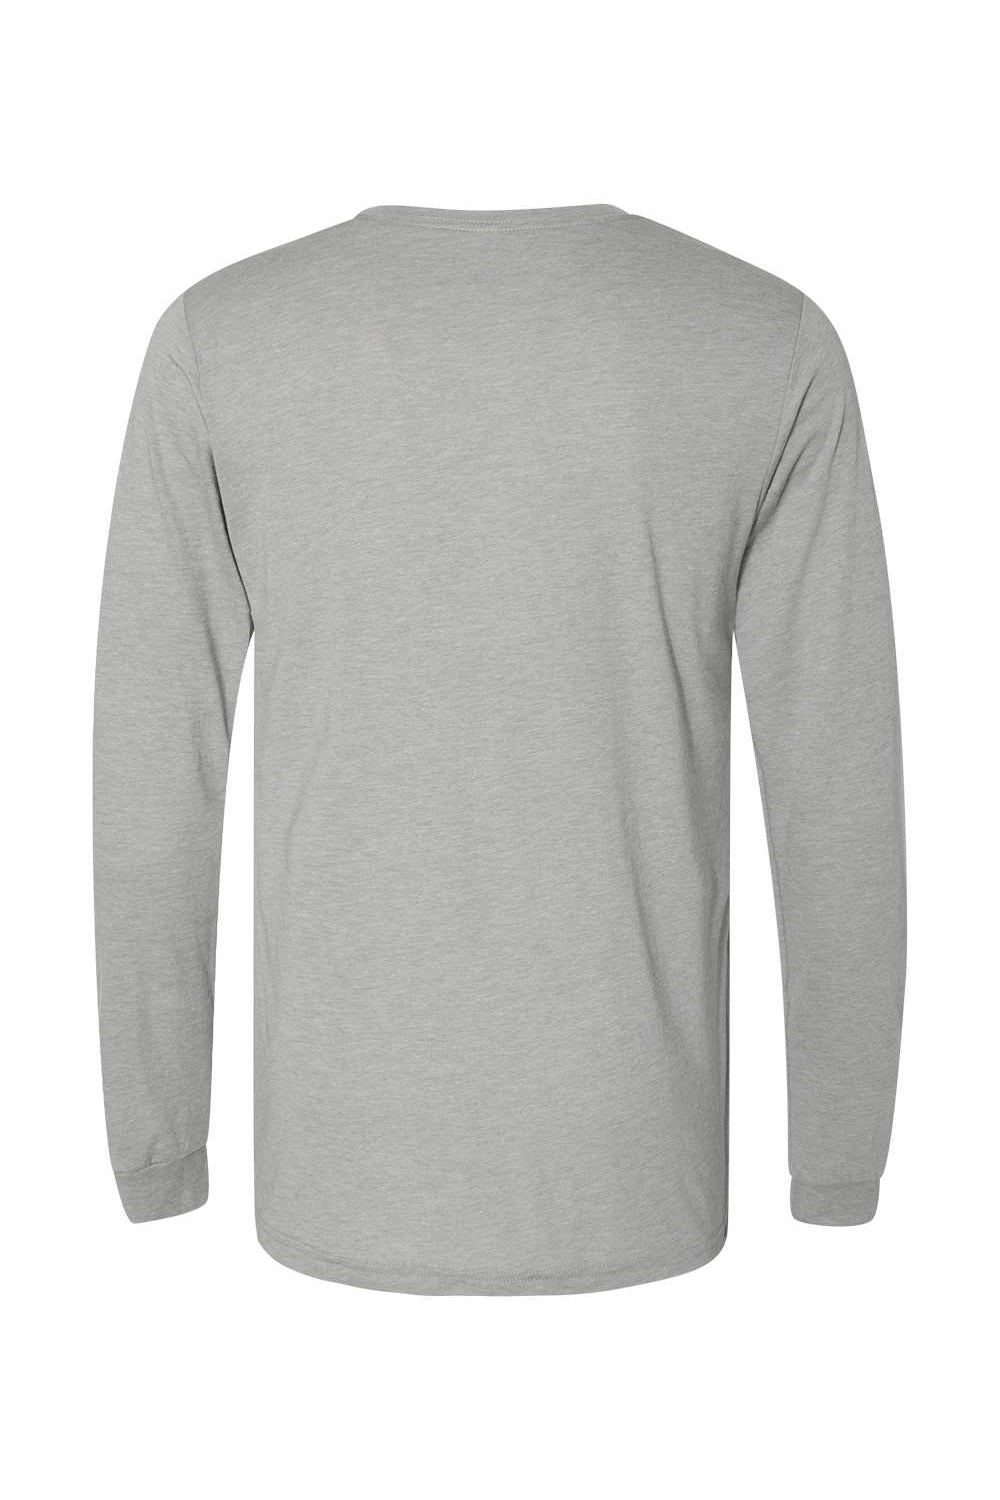 Bella + Canvas BC3501/3501 Mens Jersey Long Sleeve Crewneck T-Shirt Heather Grey Triblend Flat Back